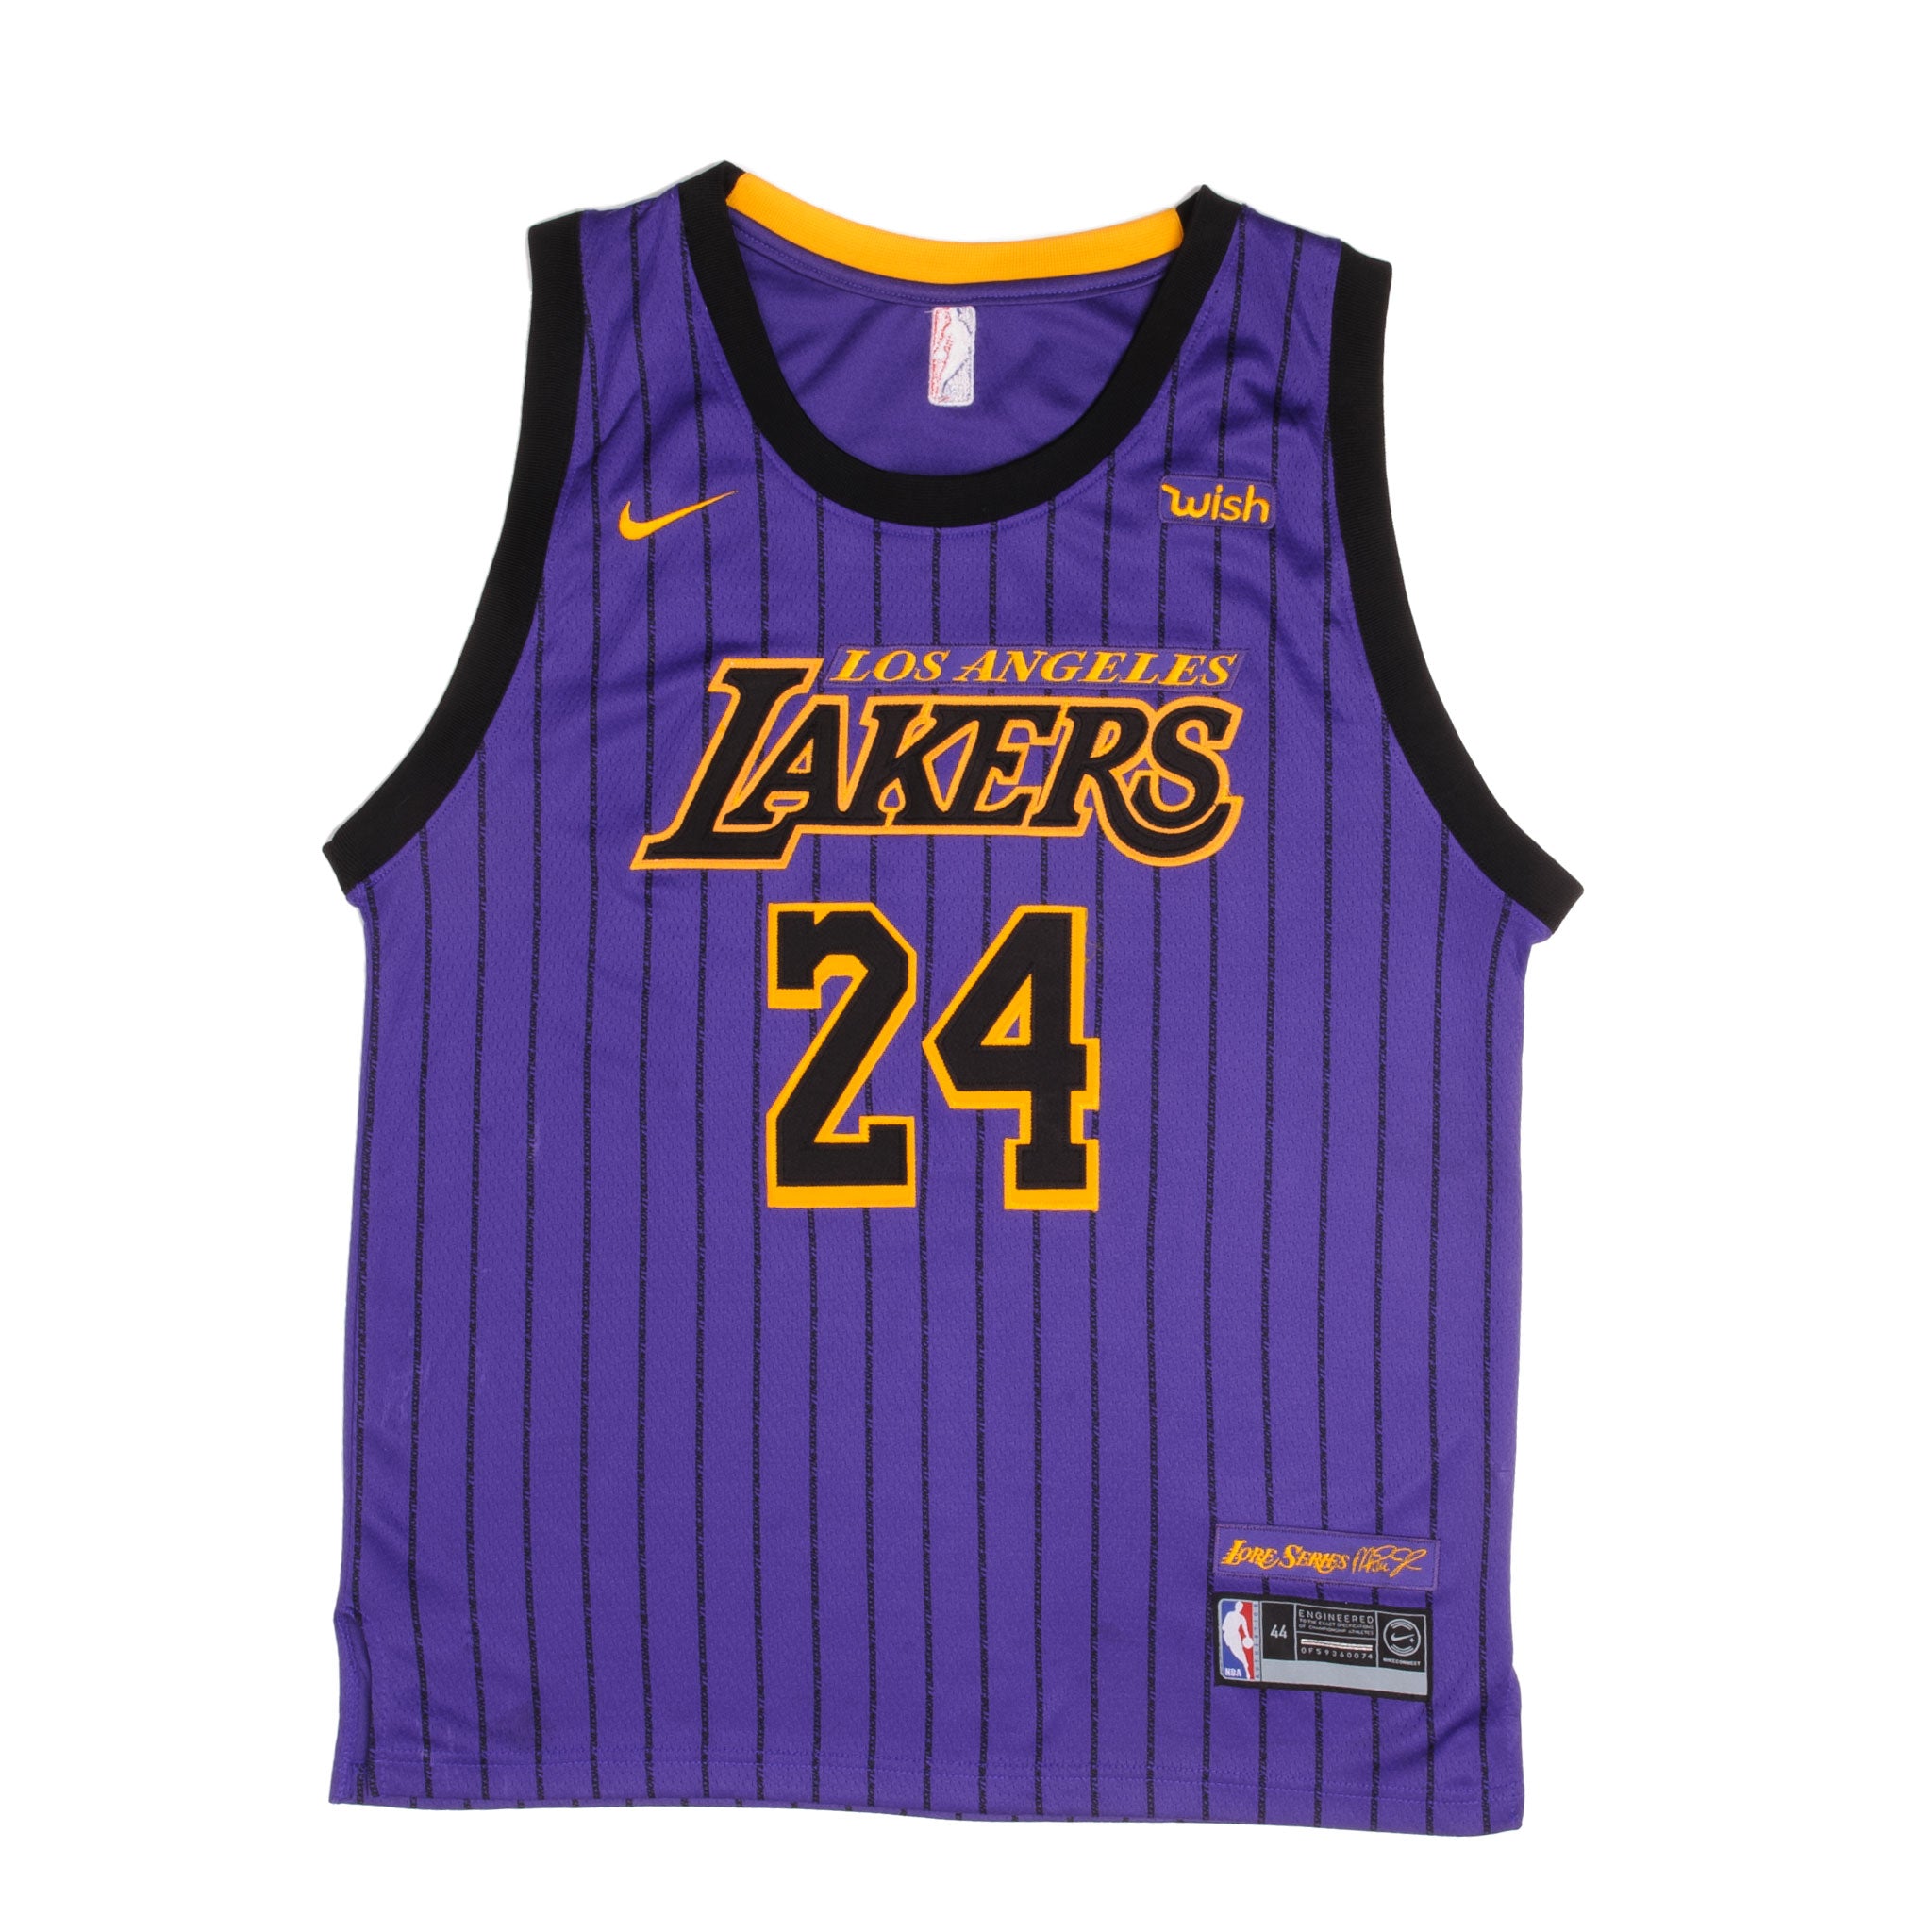 Kobe Bryant No.8 - 2018-19 Los Angeles Lakers City Edition Jersey